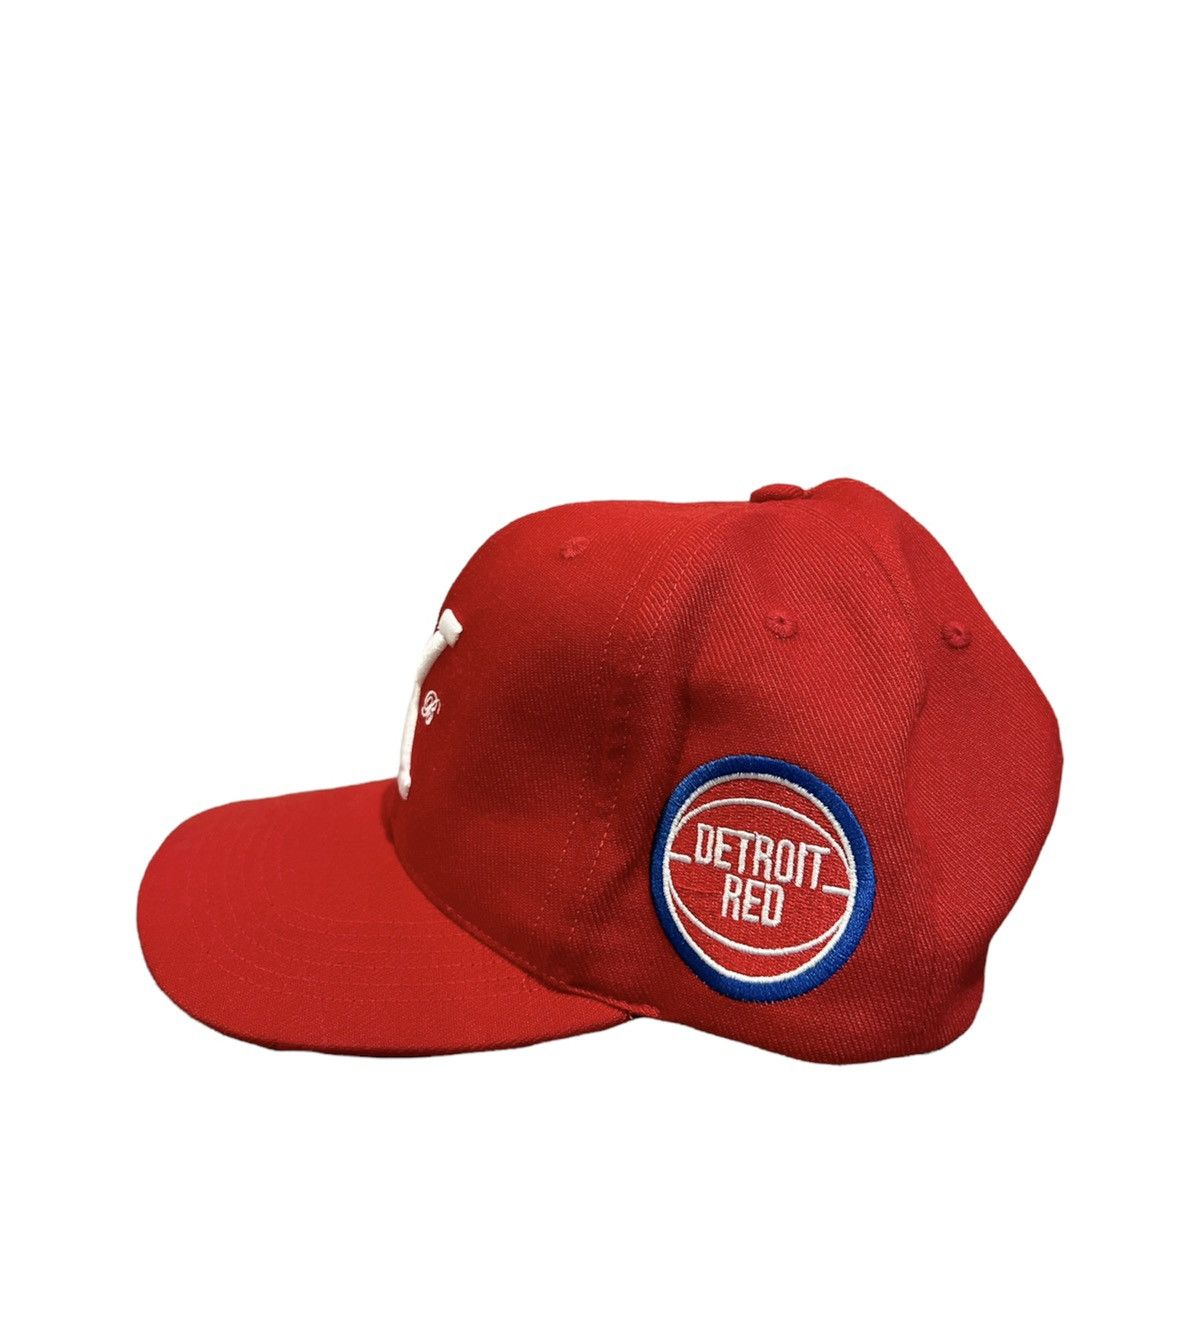 Tuff Crowd Tuff Crowd Detroit Red Snapback Hat Size ONE SIZE - 4 Thumbnail